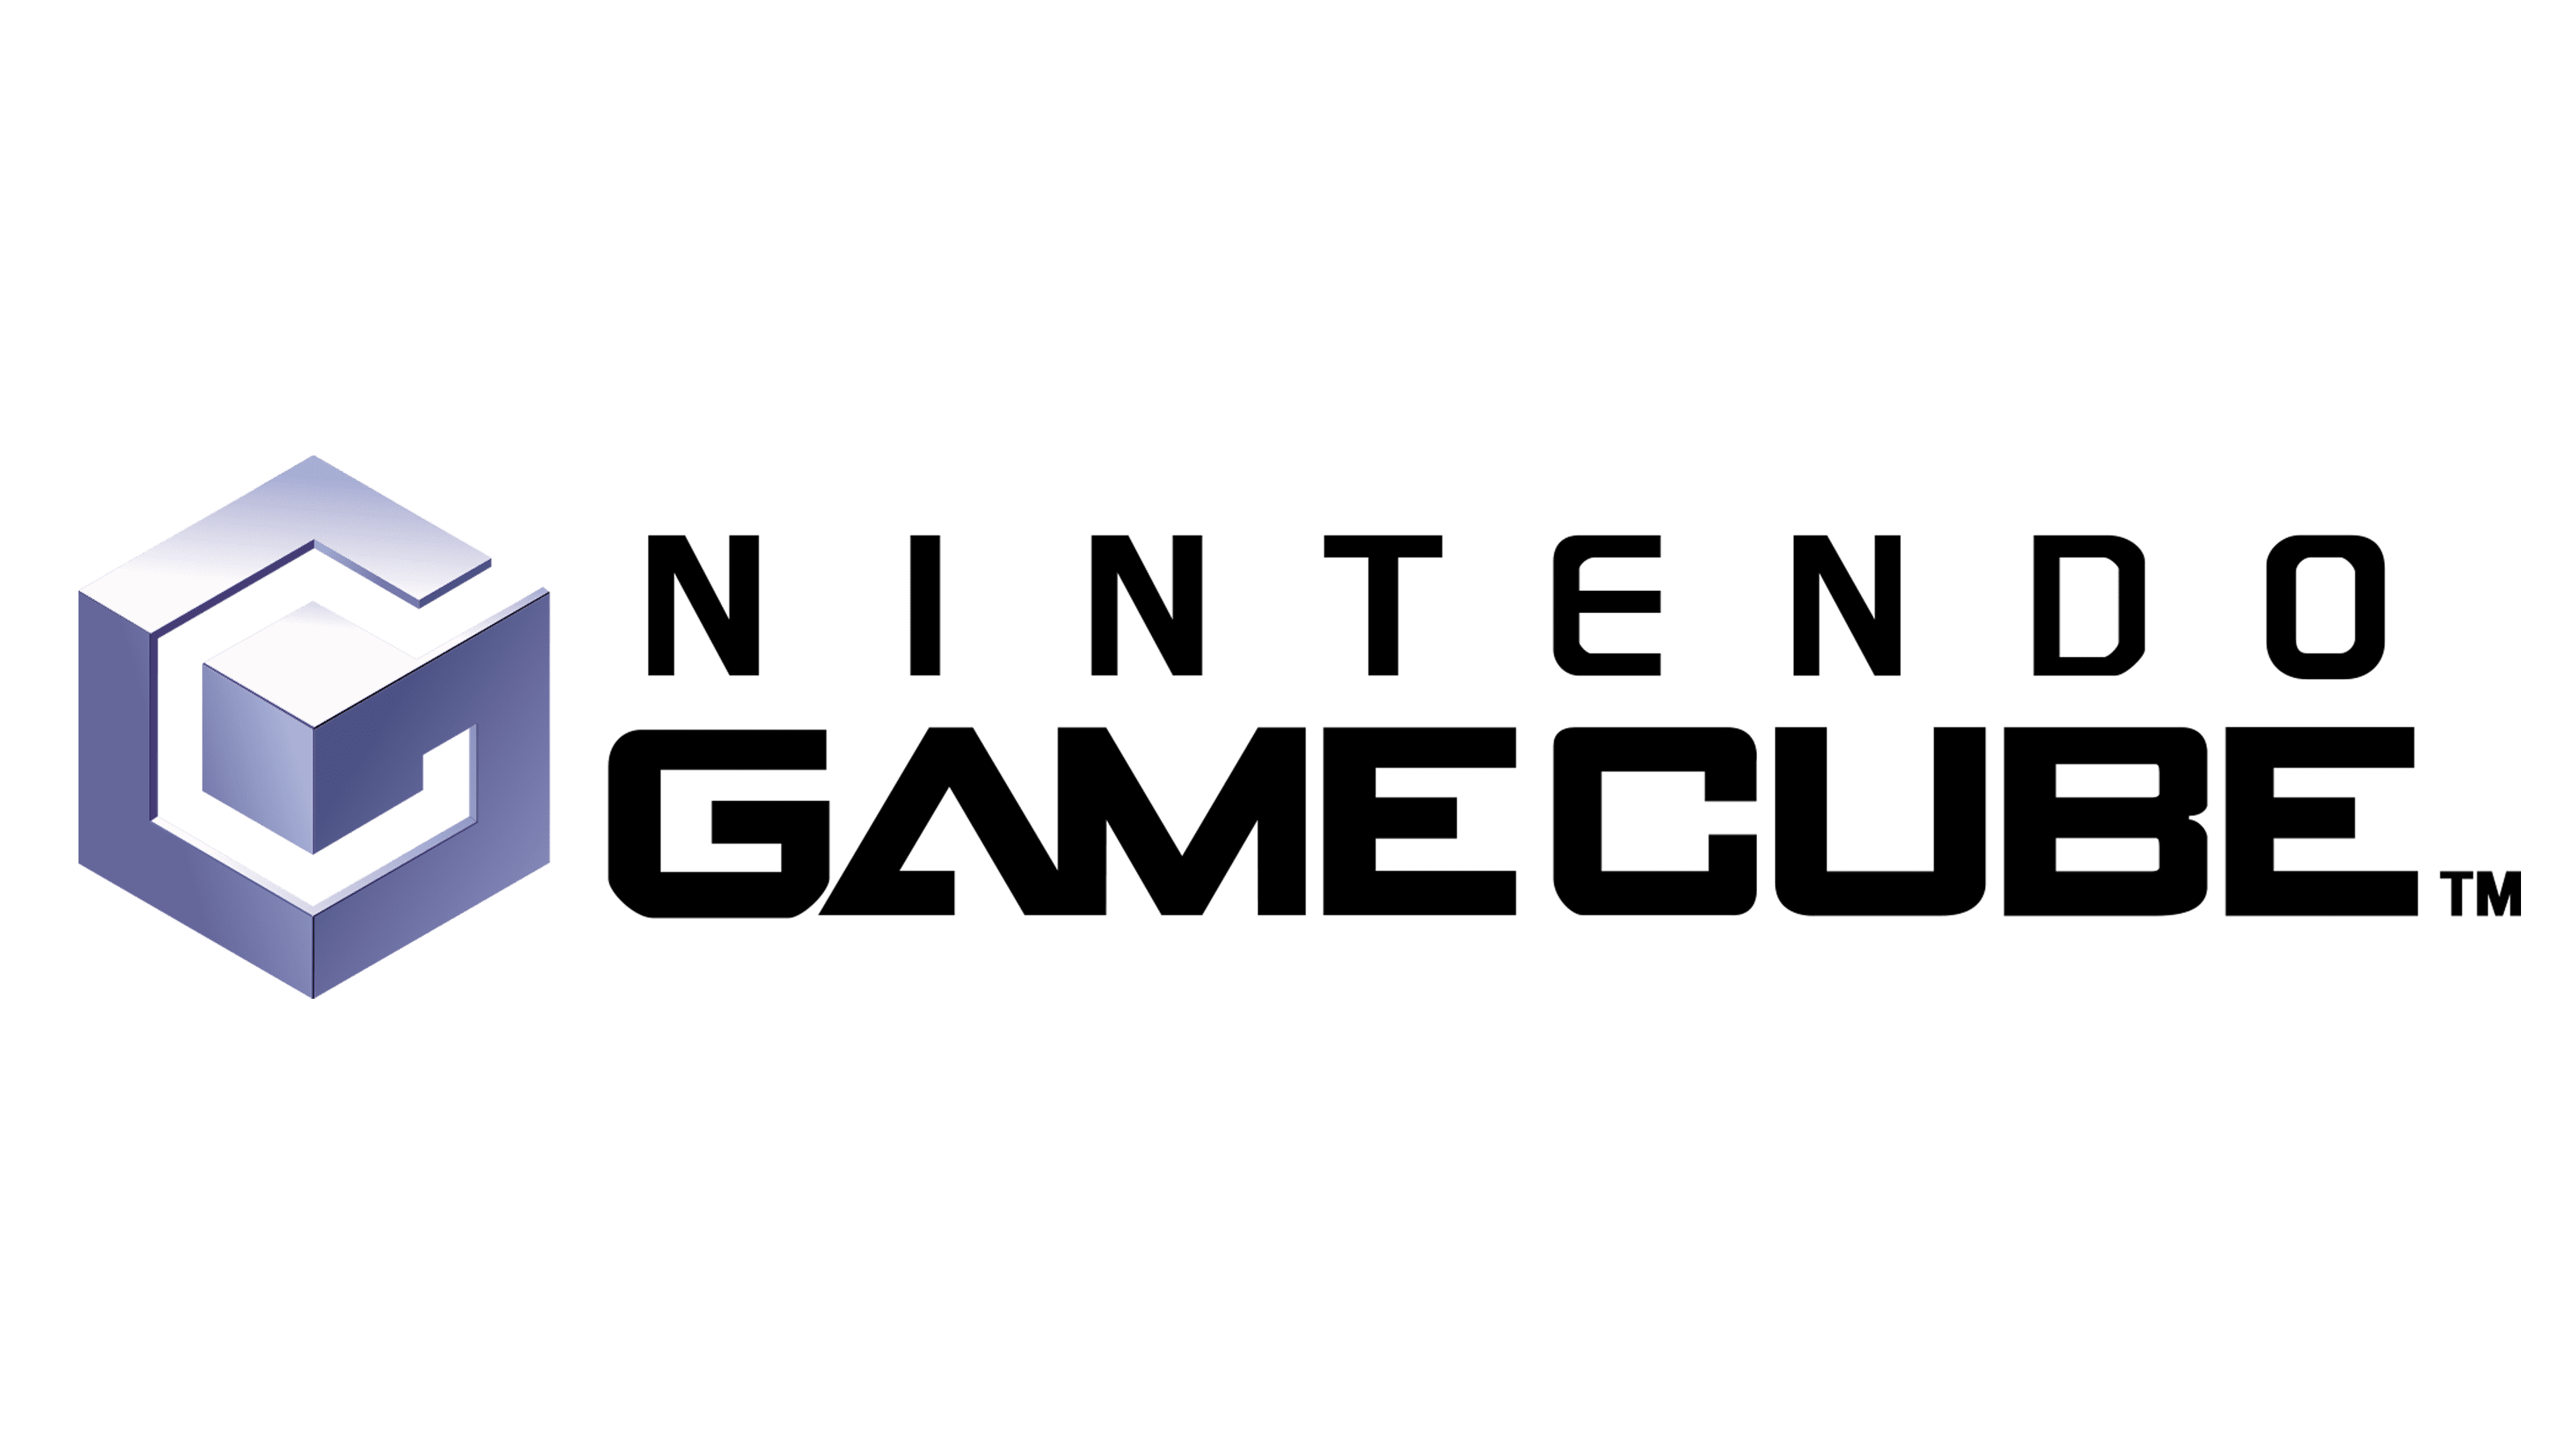 https://1000logos.net/wp-content/uploads/2021/05/Nintendo-GameCube-logo.png